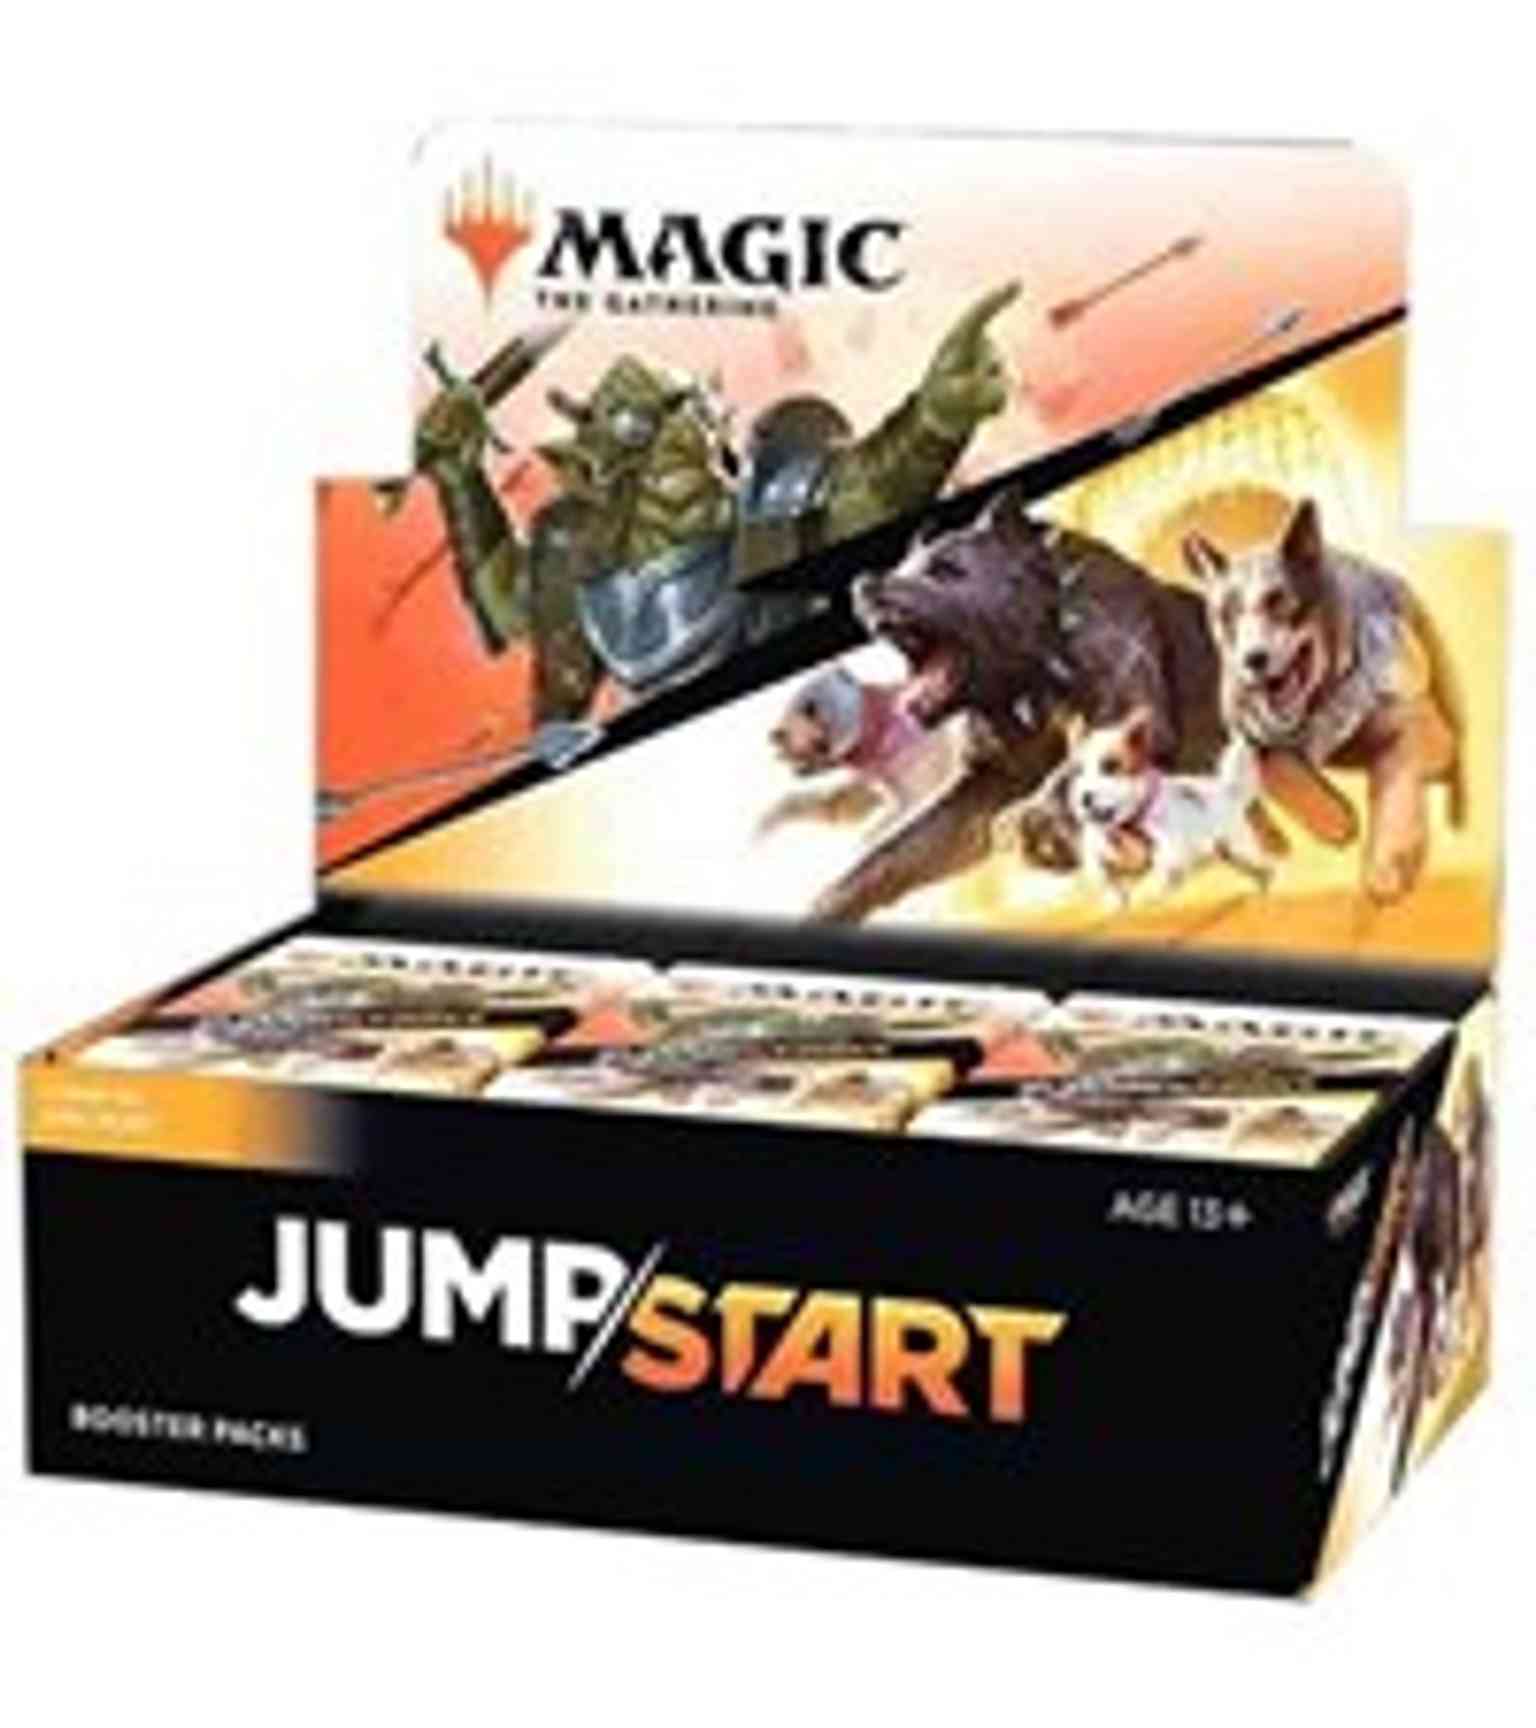 Jumpstart - Booster Box magic card front